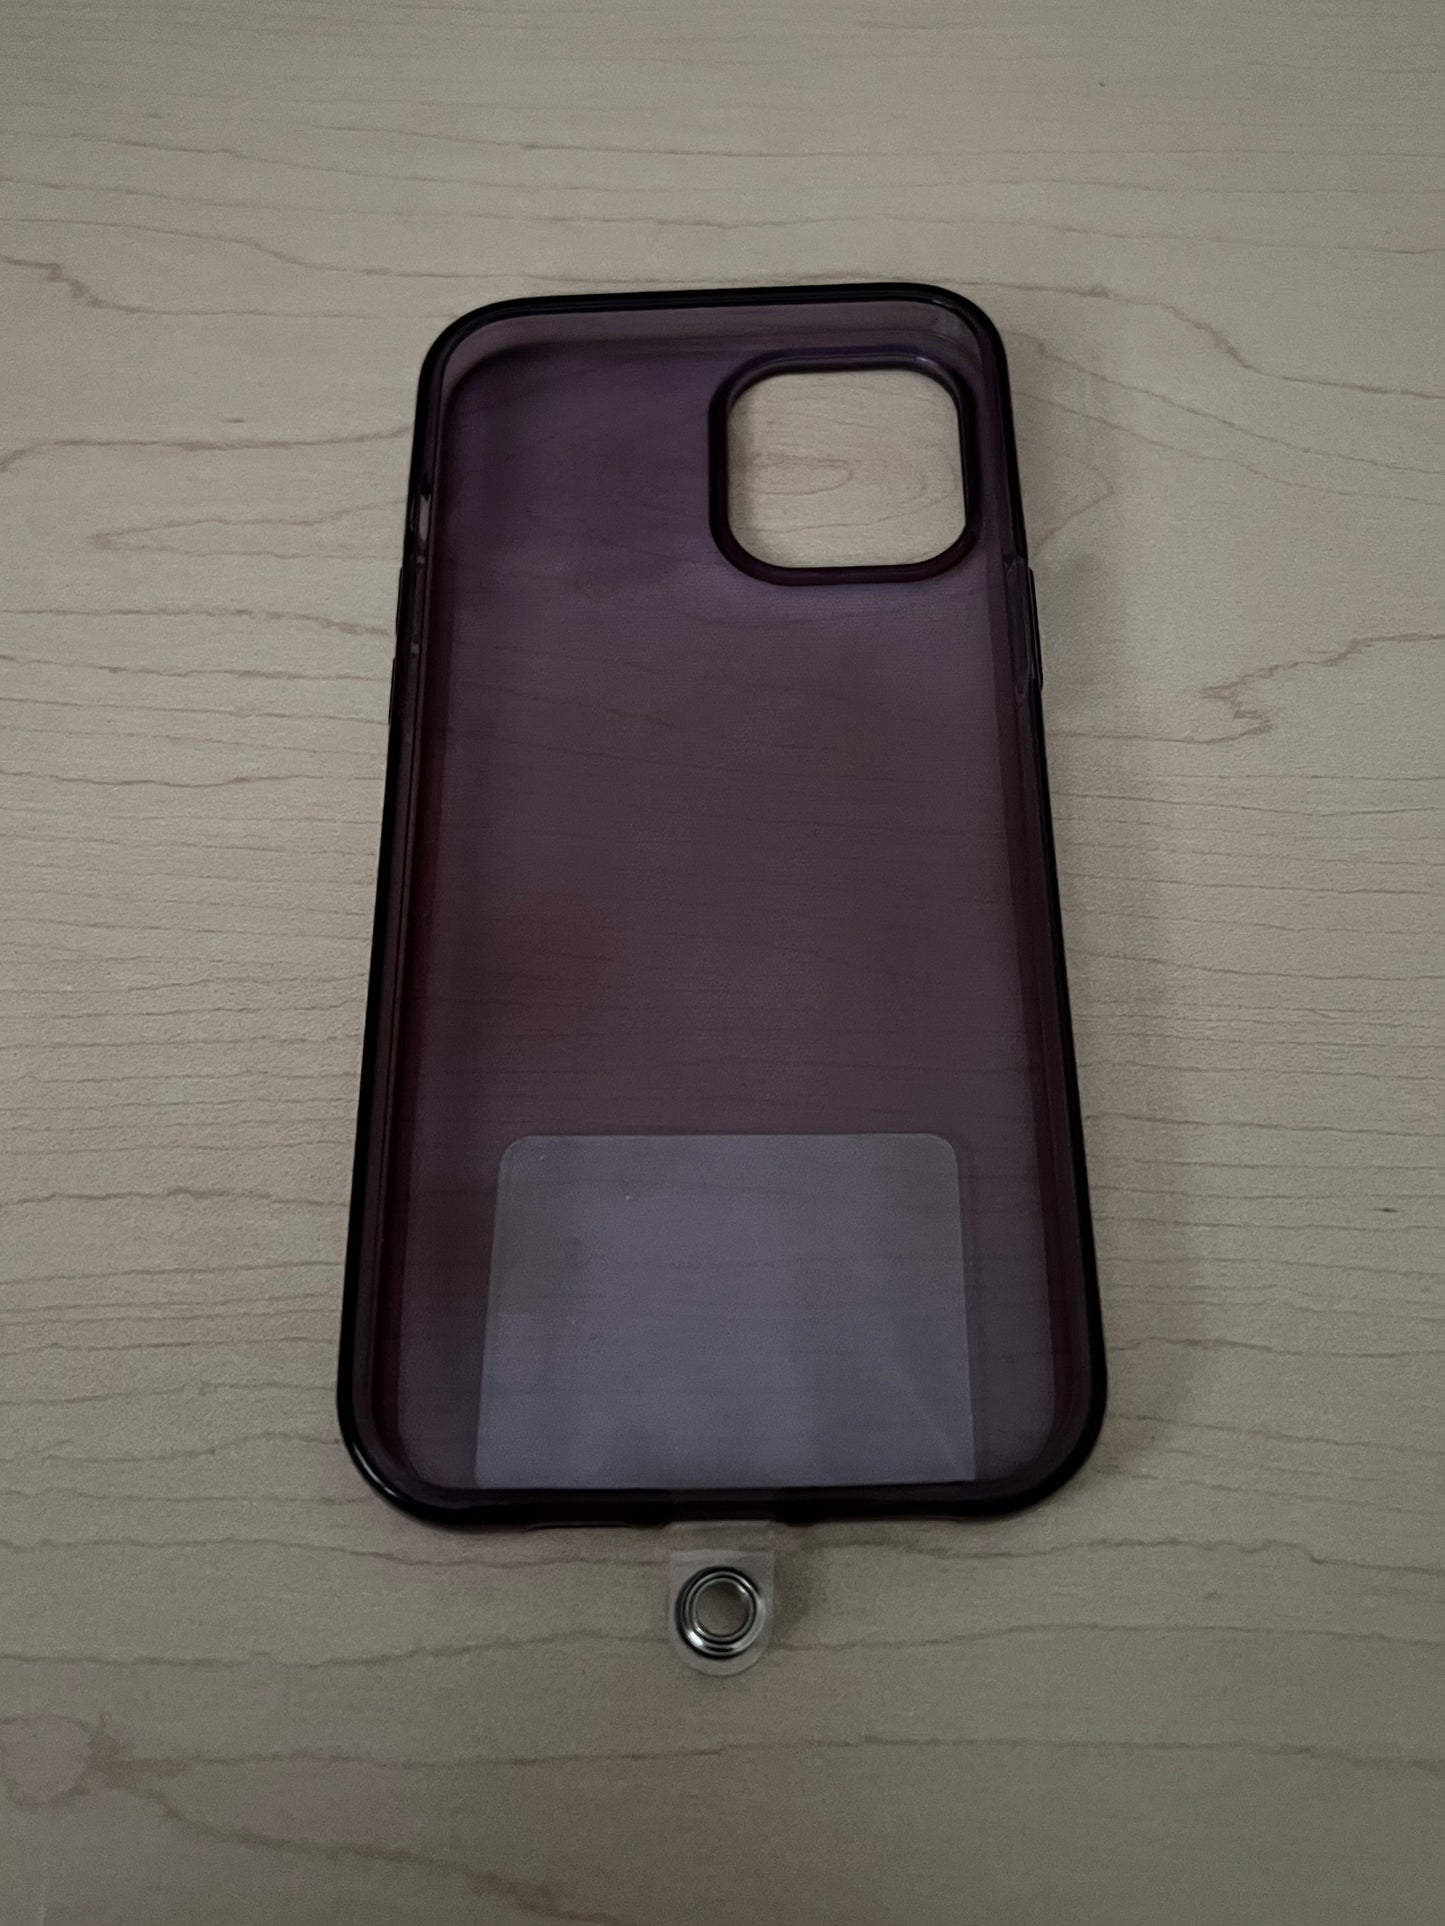 Mushroom Purple Phone/Keychain/Bag Charm